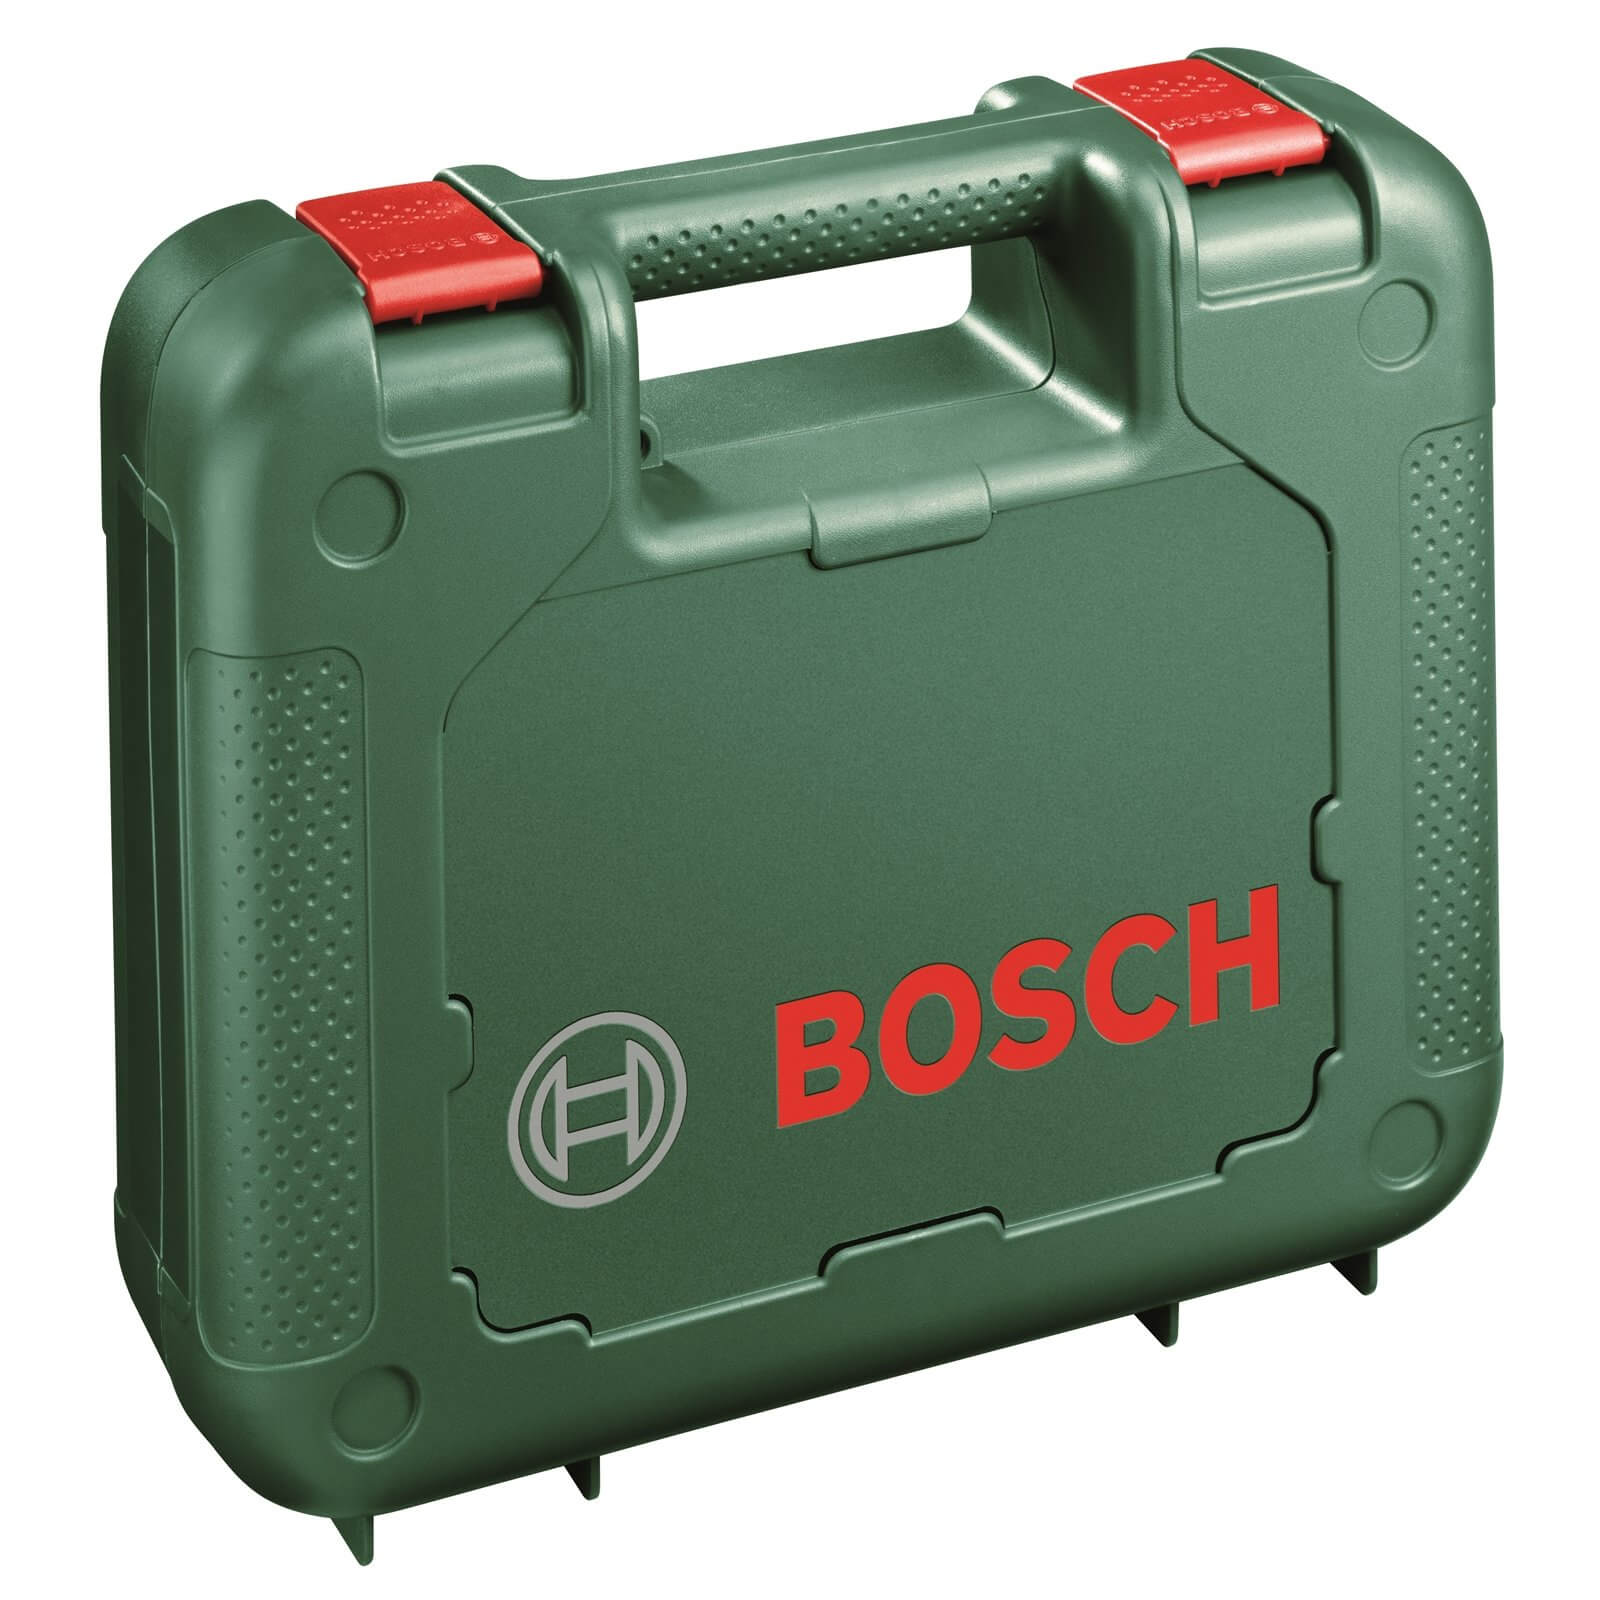 Bosch Psr Select Cordless Screwdriver